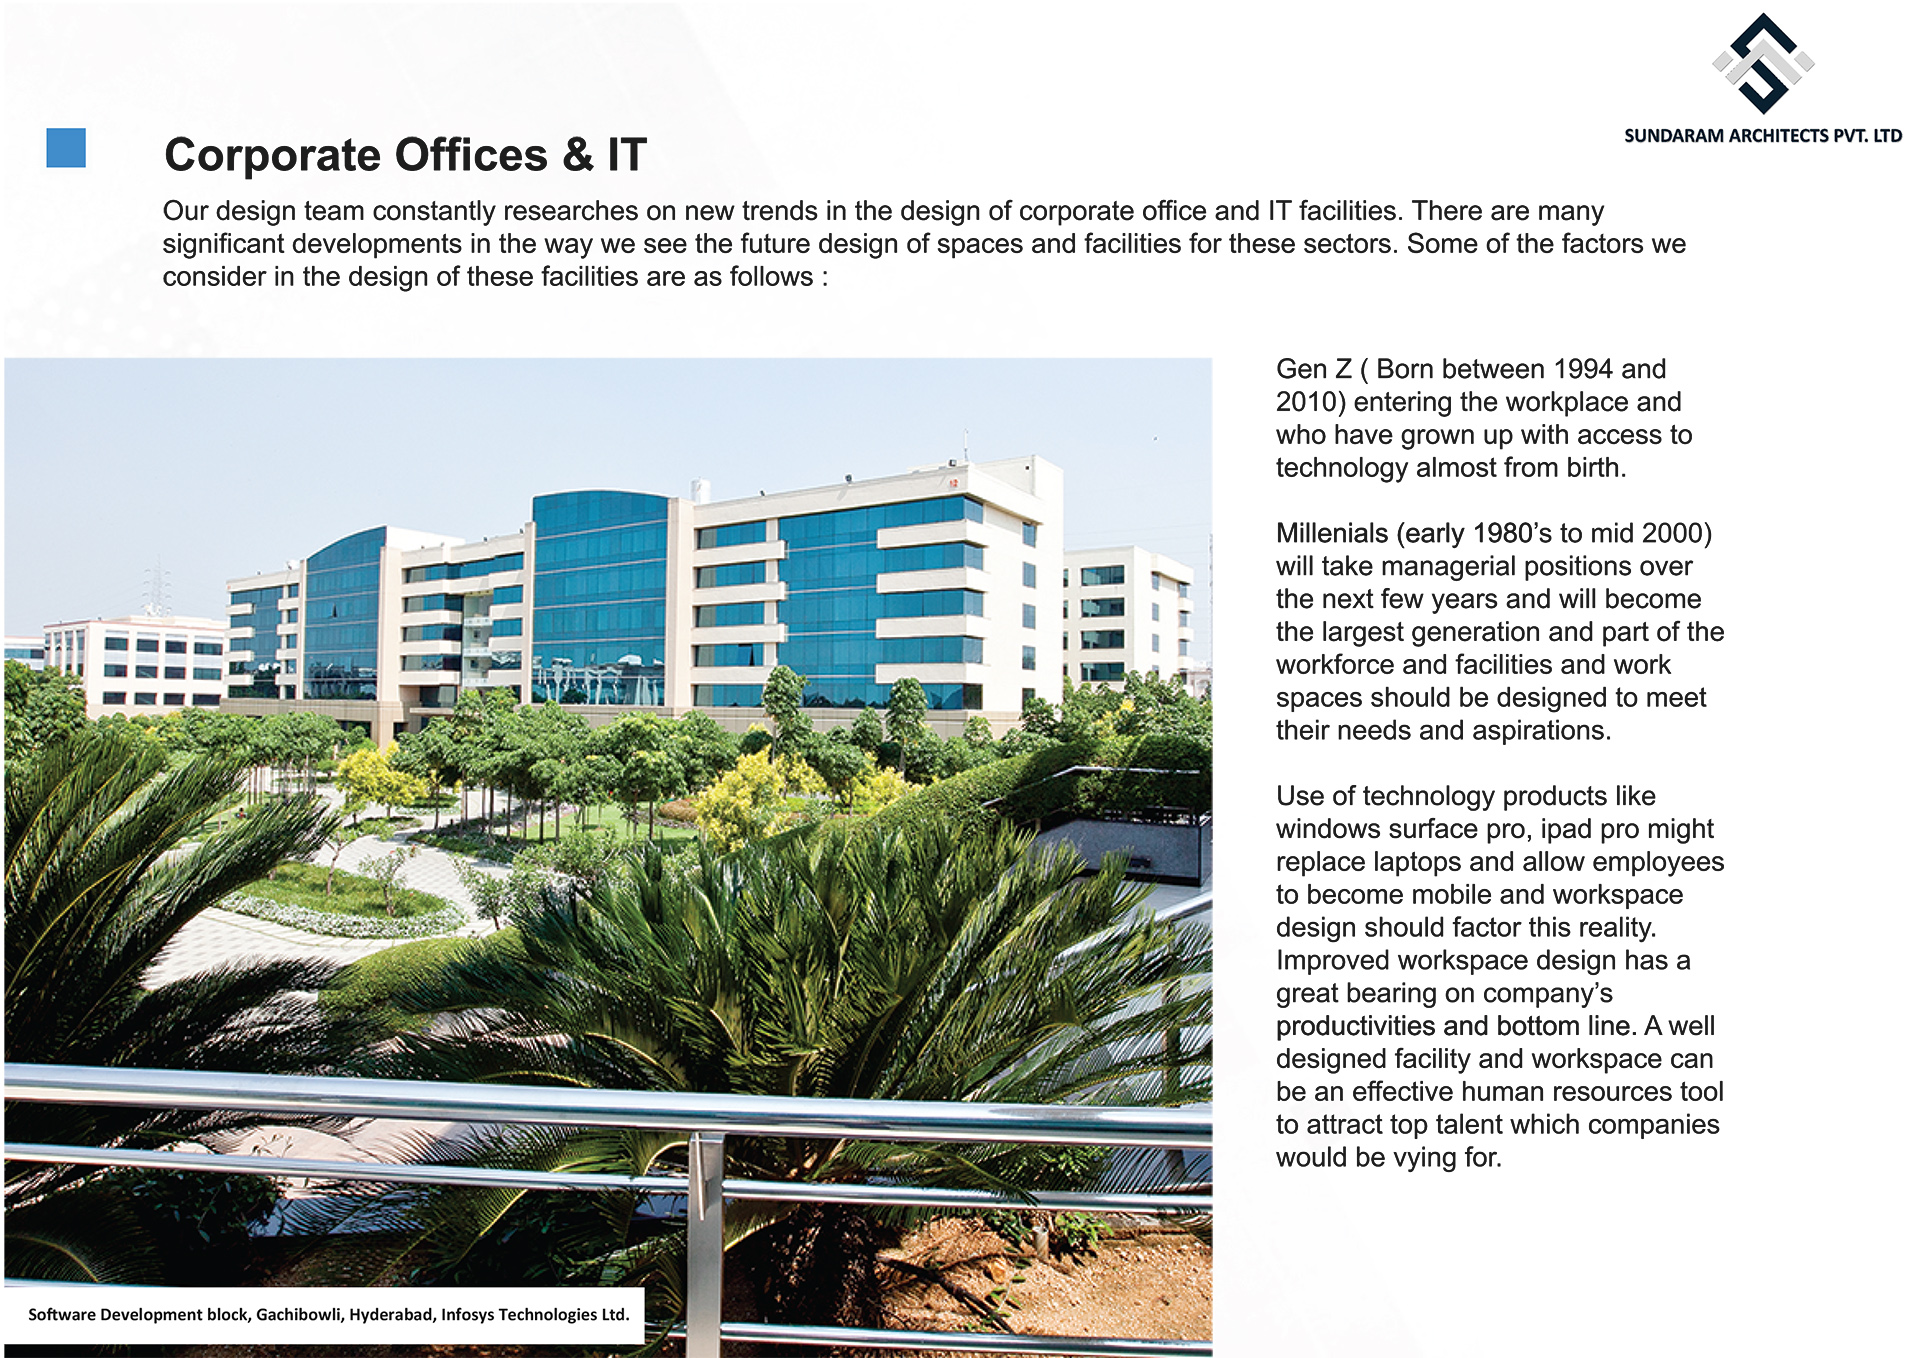 Software Development Block, Hyderabad, Infosys Technologies Ltd - Corporate Offices & IT Design - Best Architecture Design in India,Bangalore